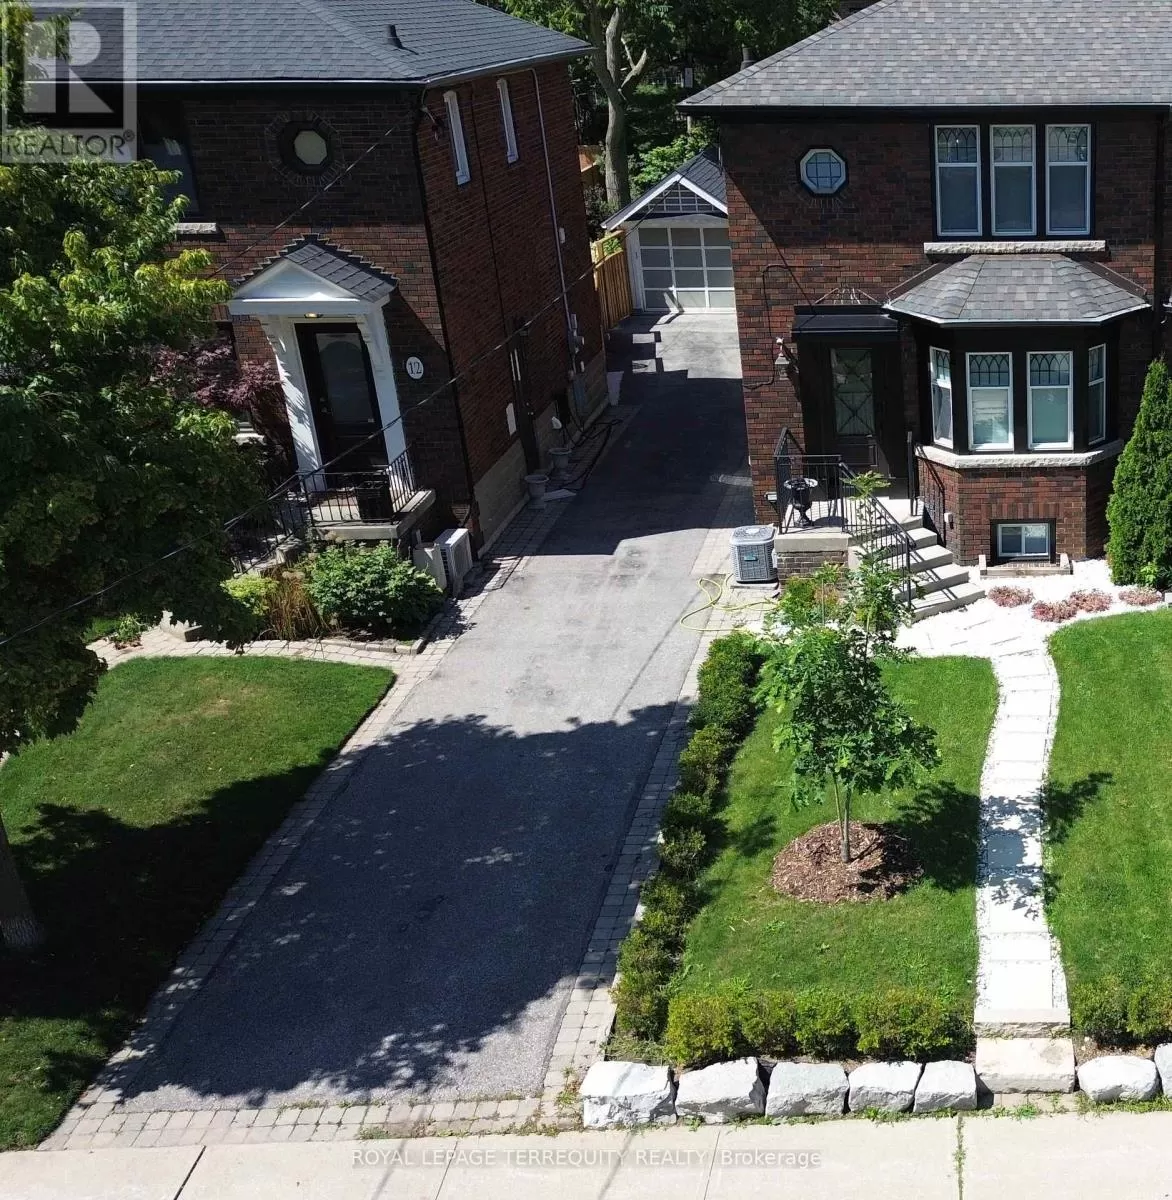 House for rent: 14 Crofton Road, Toronto, Ontario M4G 2B4